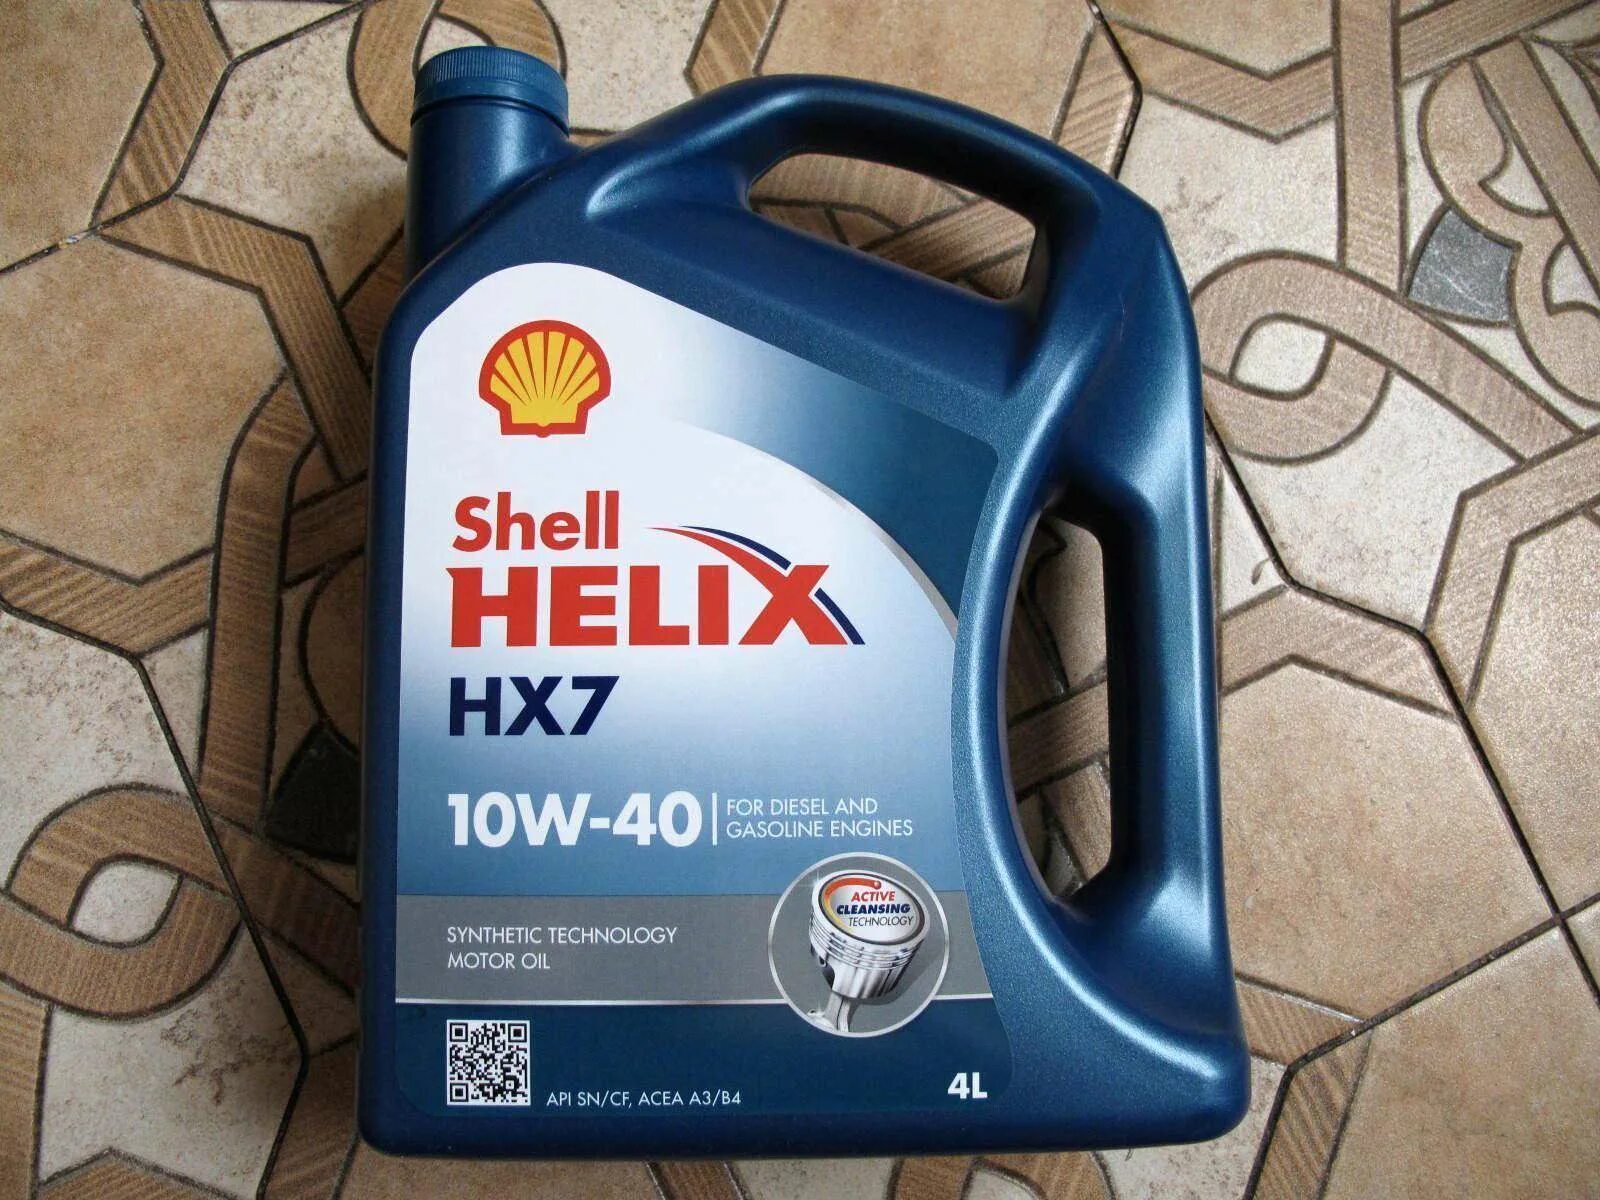 Shell HX 7 10w 40 Active Cleansing. Shell hx7 10w 40 5л. Shell 10w 40 полусинтетика. Моторное масло Шелл Хеликс 10w 40.